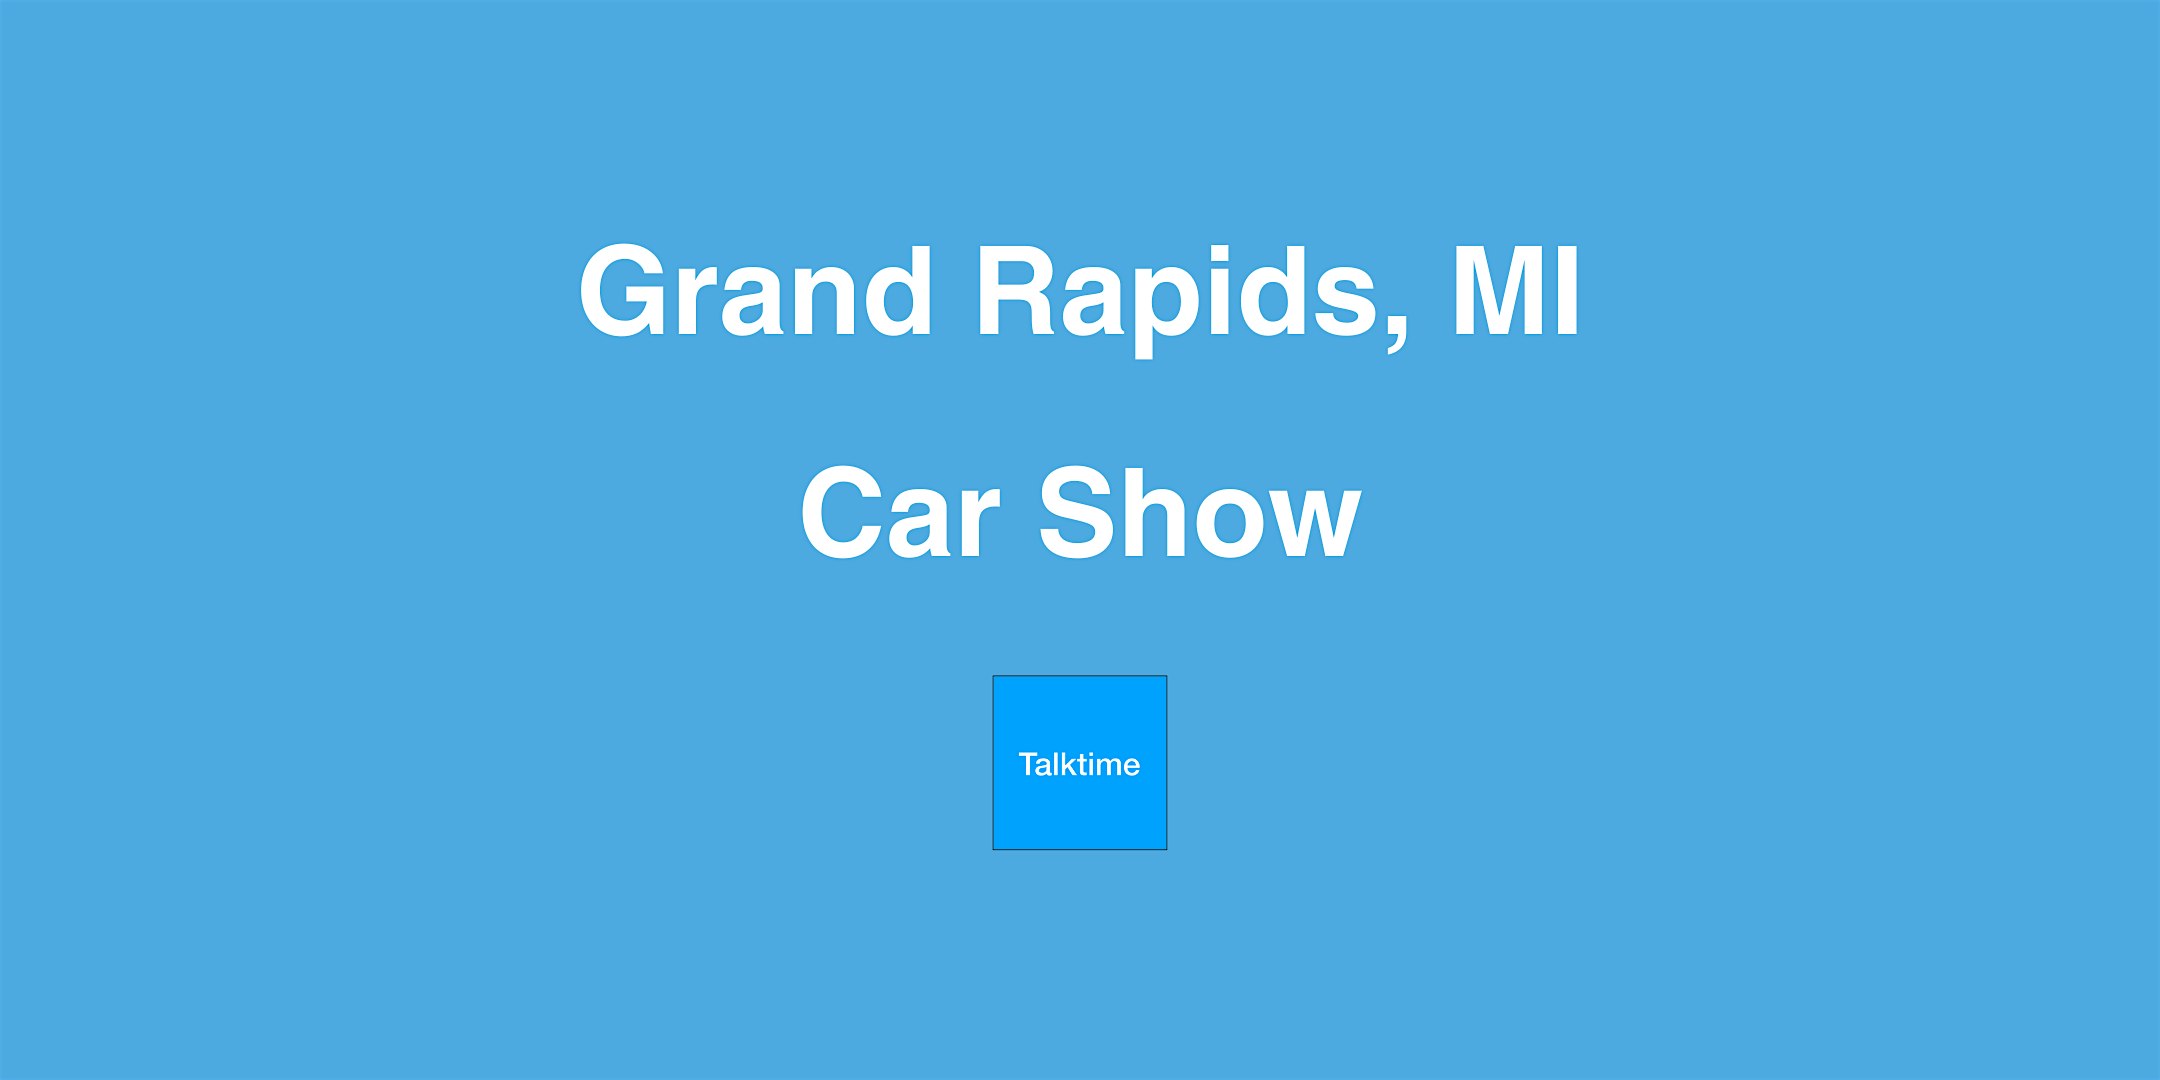 Car Show - Grand Rapids